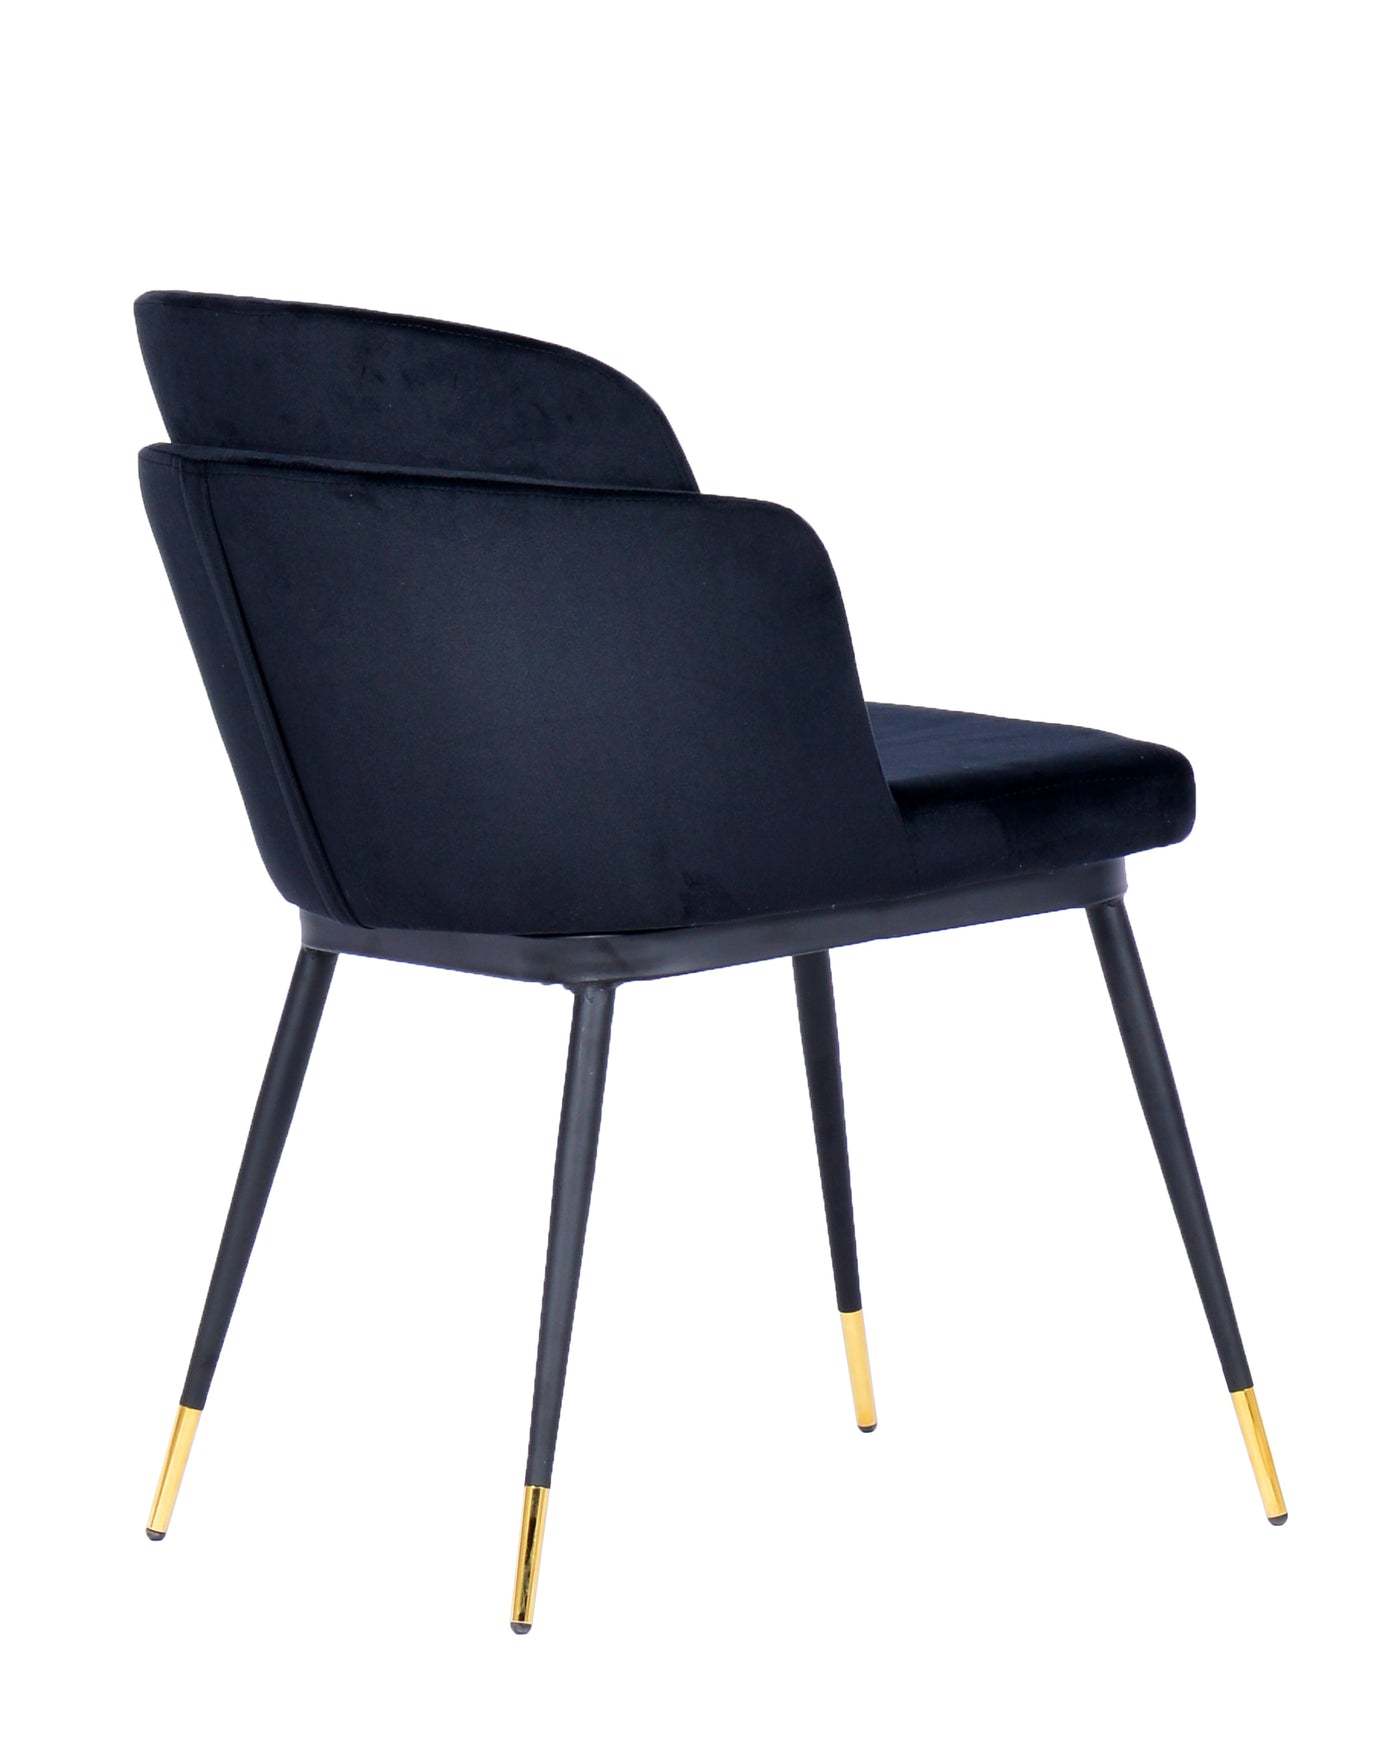 Talulah Dining Chair Black Velvet - Future Classics Furniture